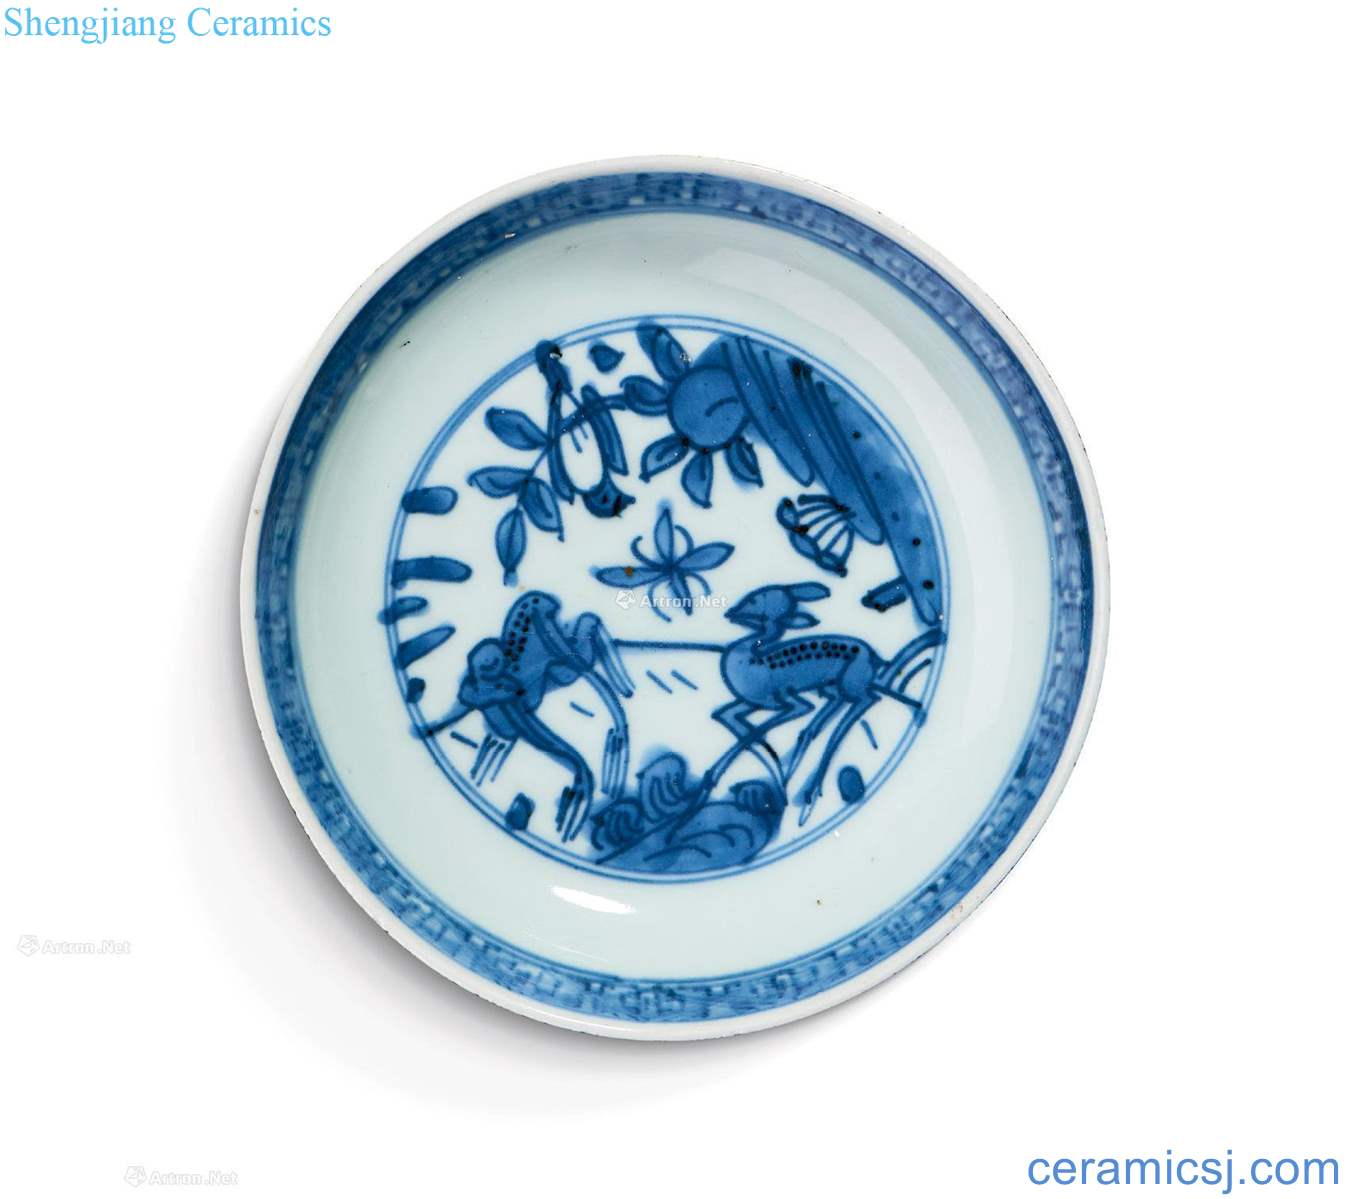 Blue and white "fu lu shou Ming wanli" plate